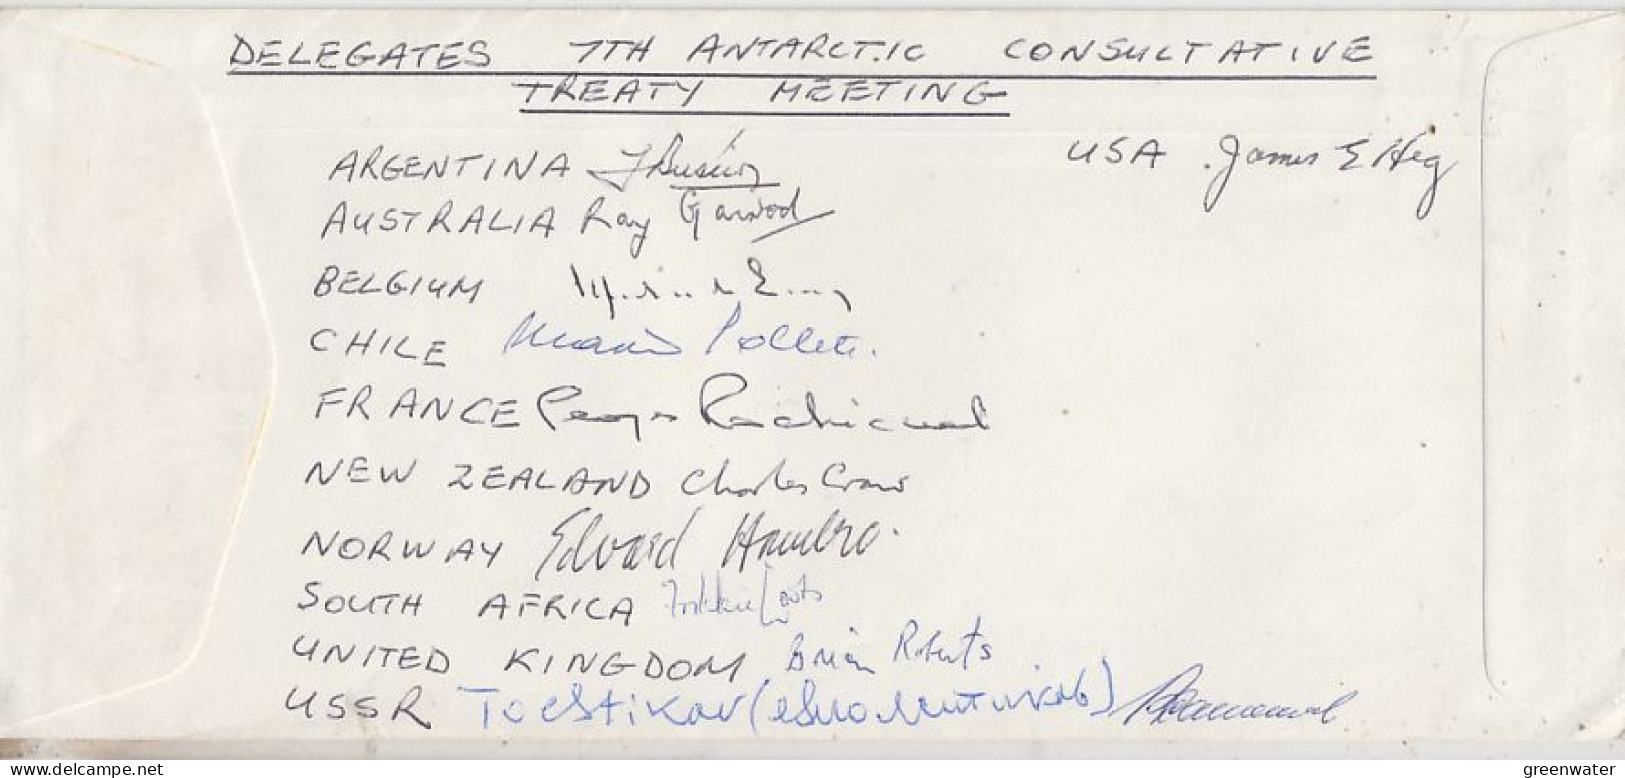 Ross Dependency "Delegates 7th. Antarctic Consultatie Treaty Meeting Wellington 1972 Ca Scott Base  20 NOV 1972 (RO206) - Covers & Documents